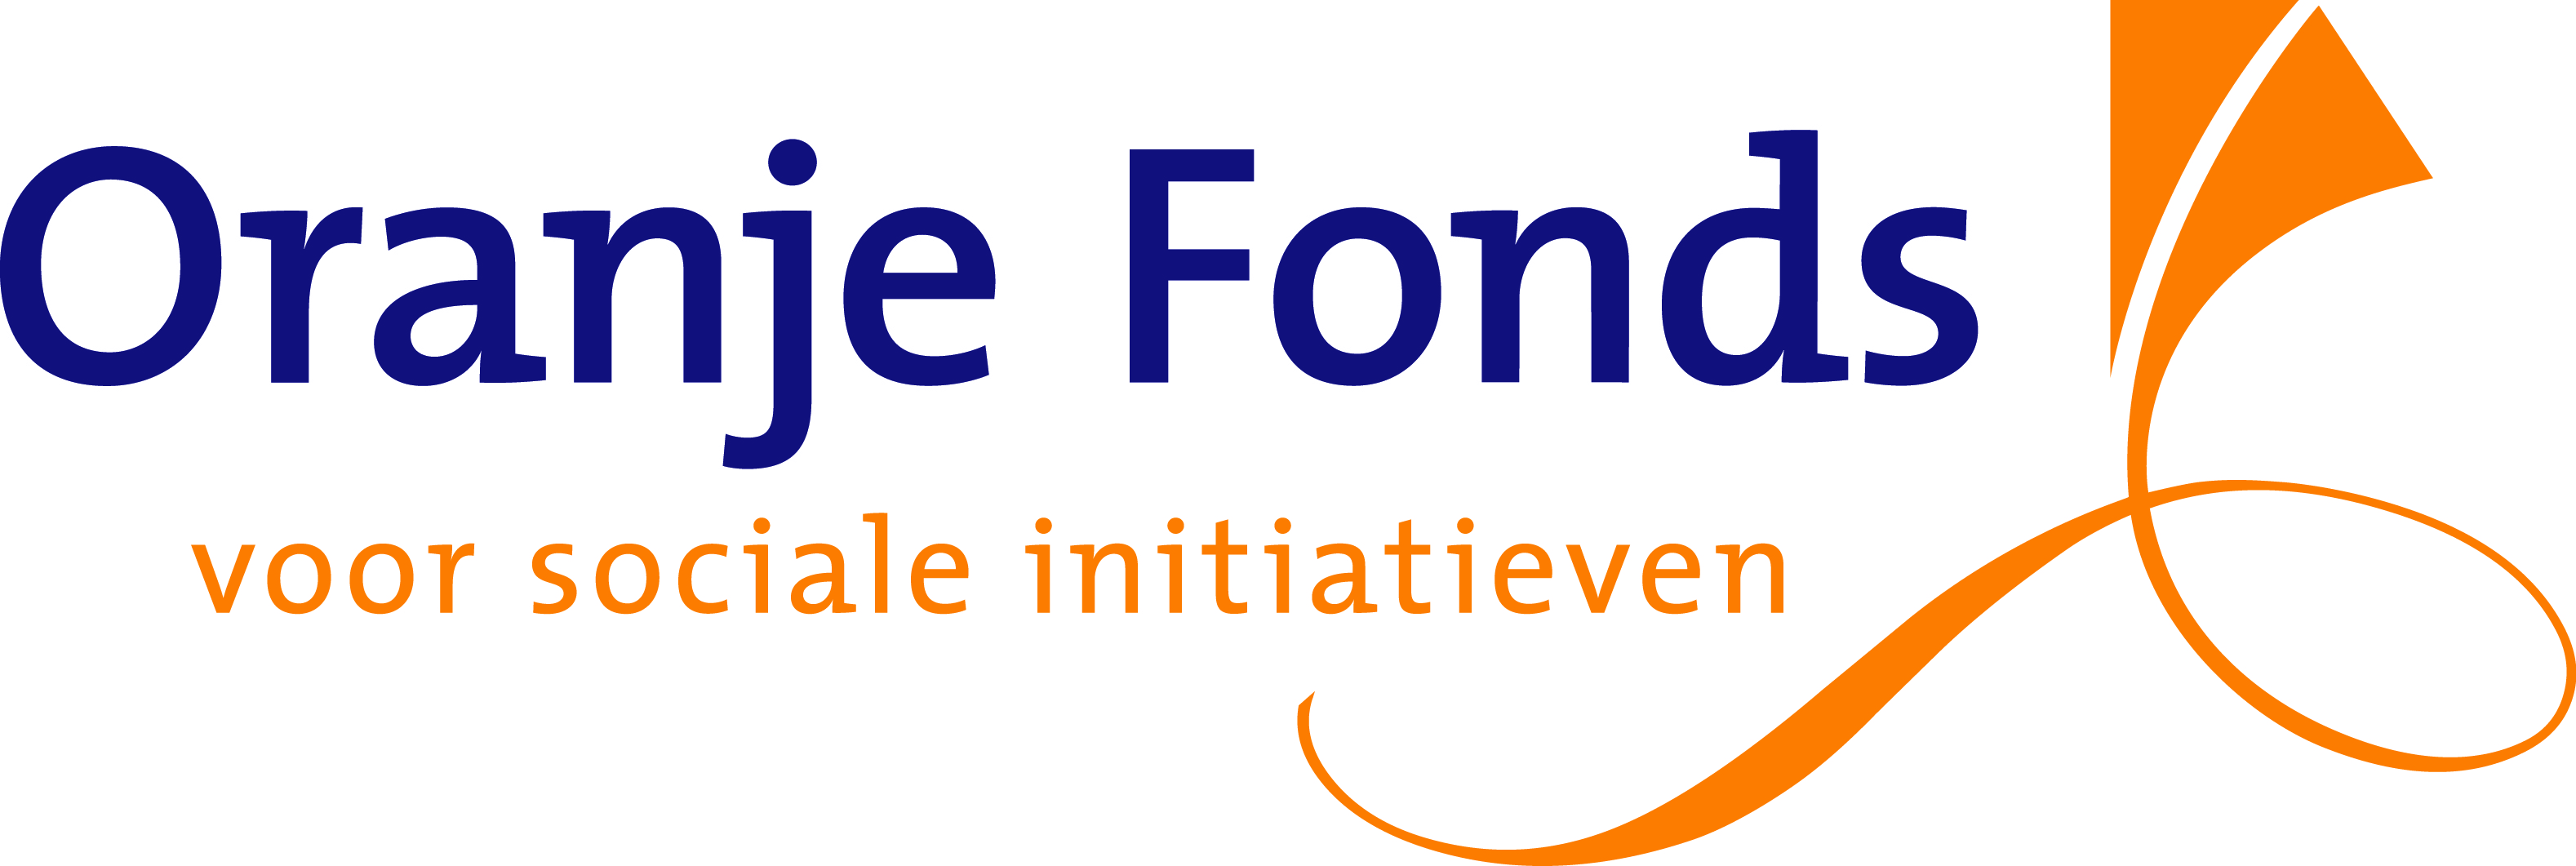 Oranje Fonds Vrienden